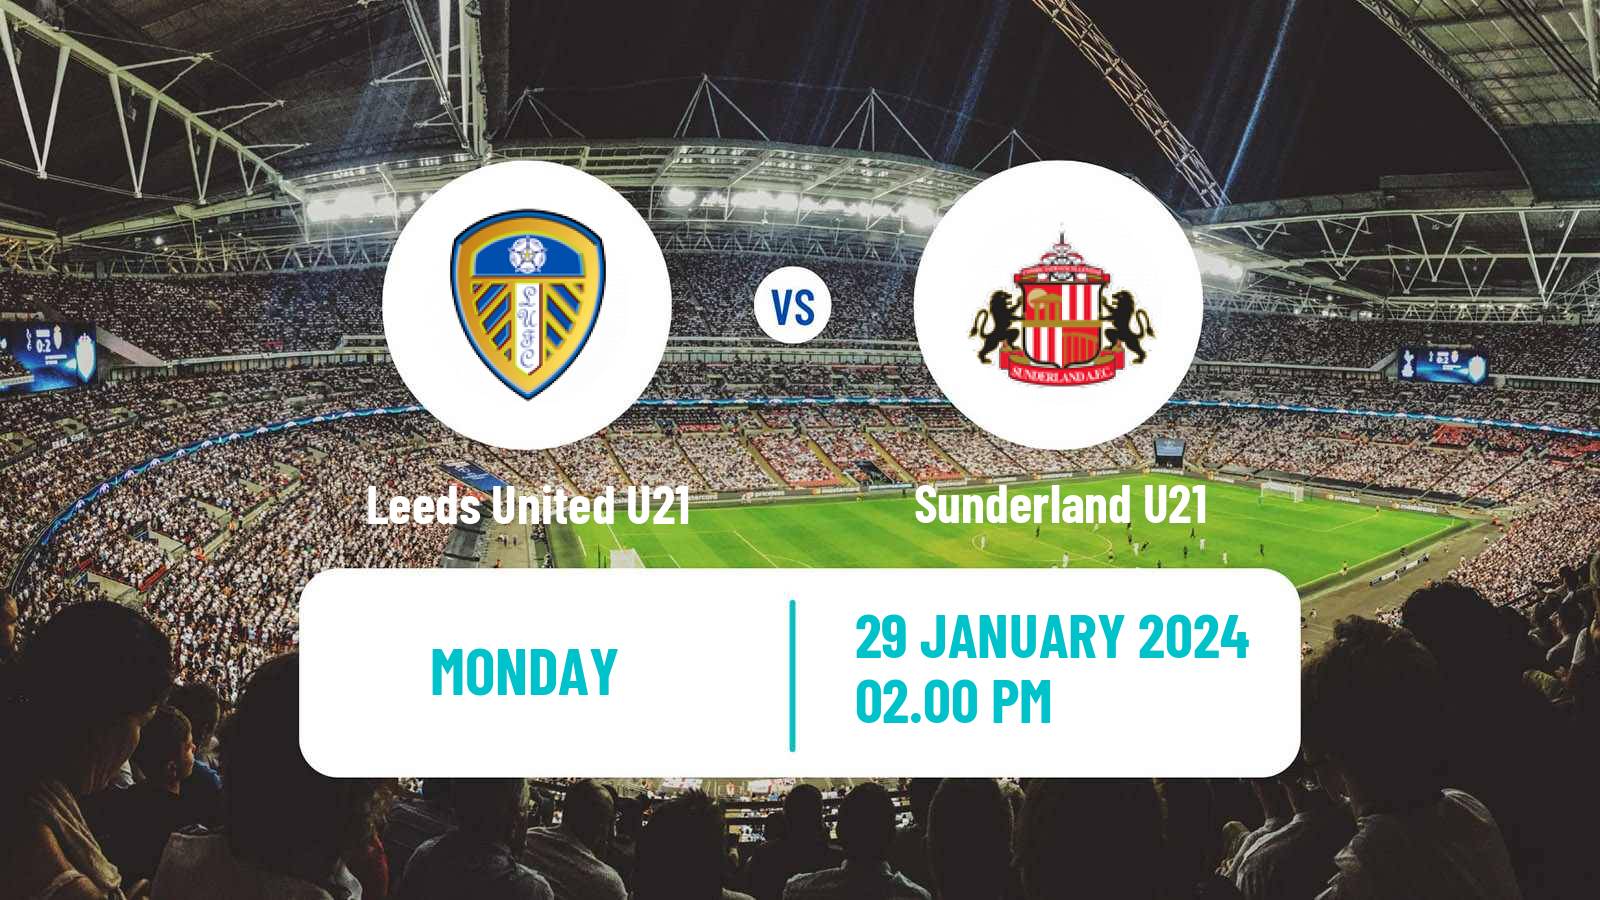 Soccer English Premier League 2 Leeds United U21 - Sunderland U21